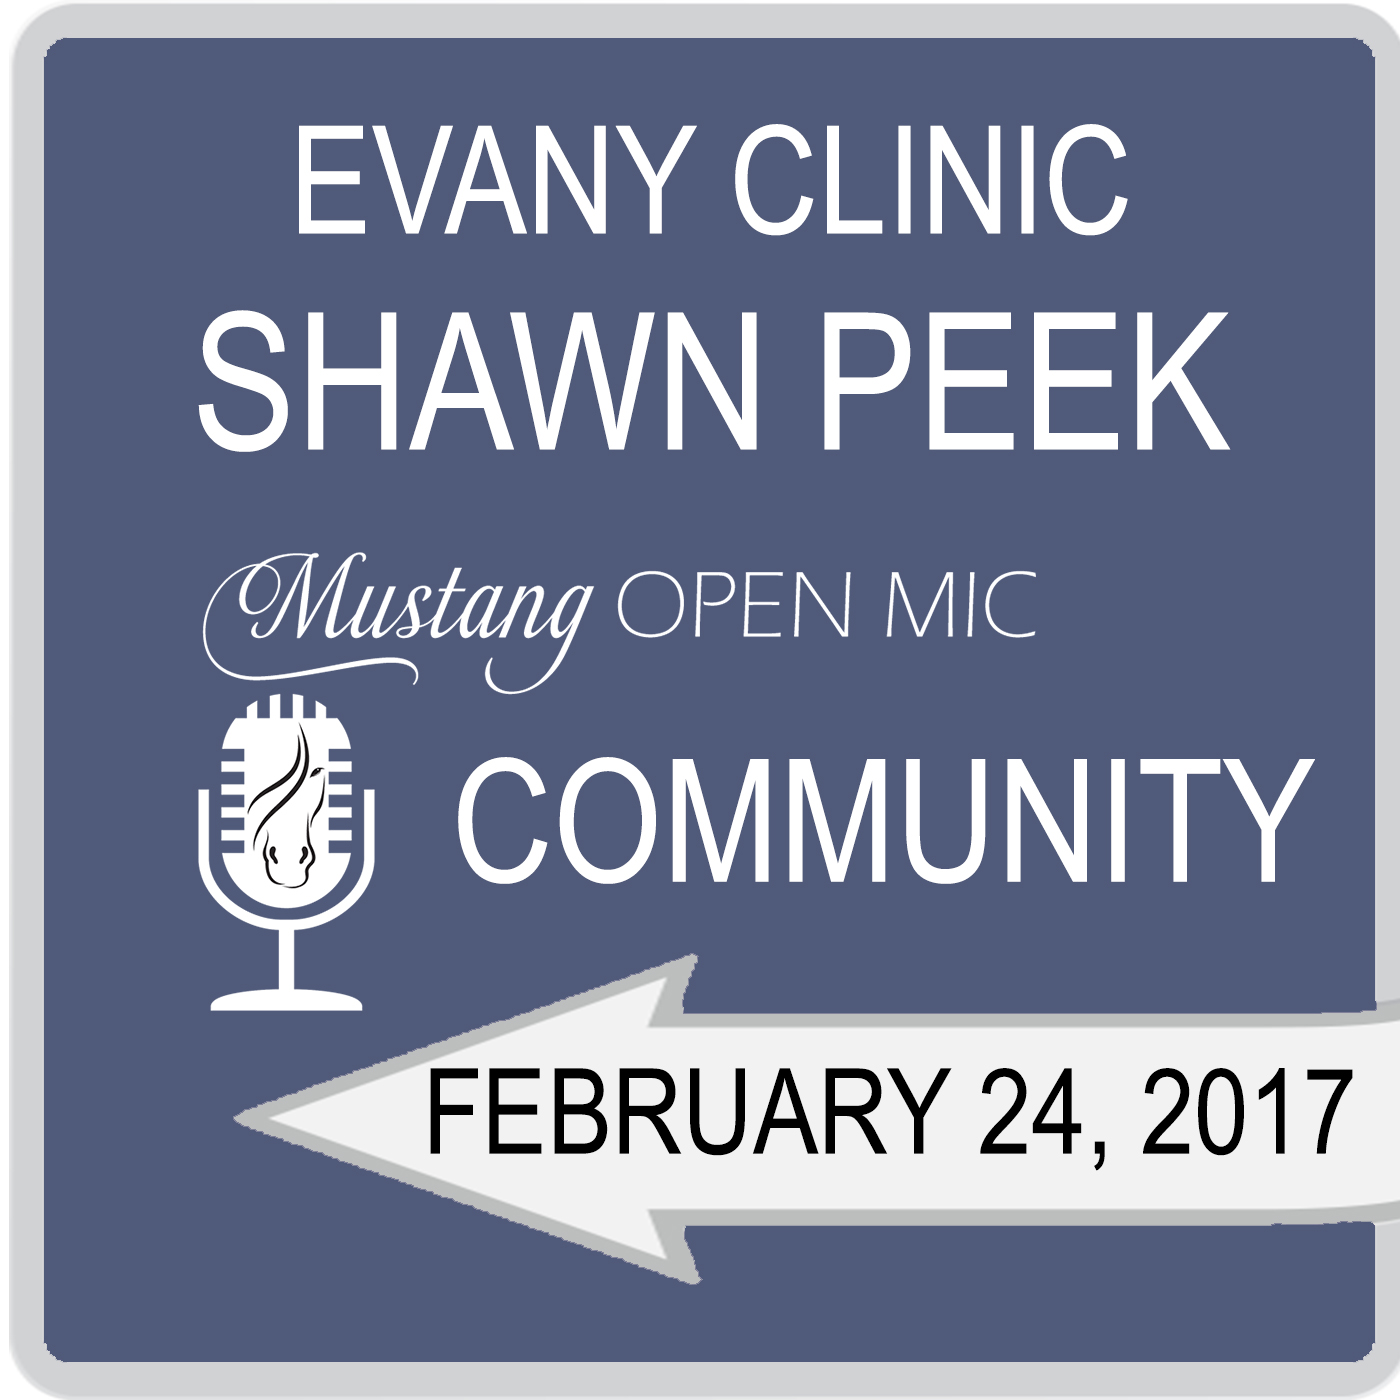 Board President - Shawn Peek - Evany Clinic